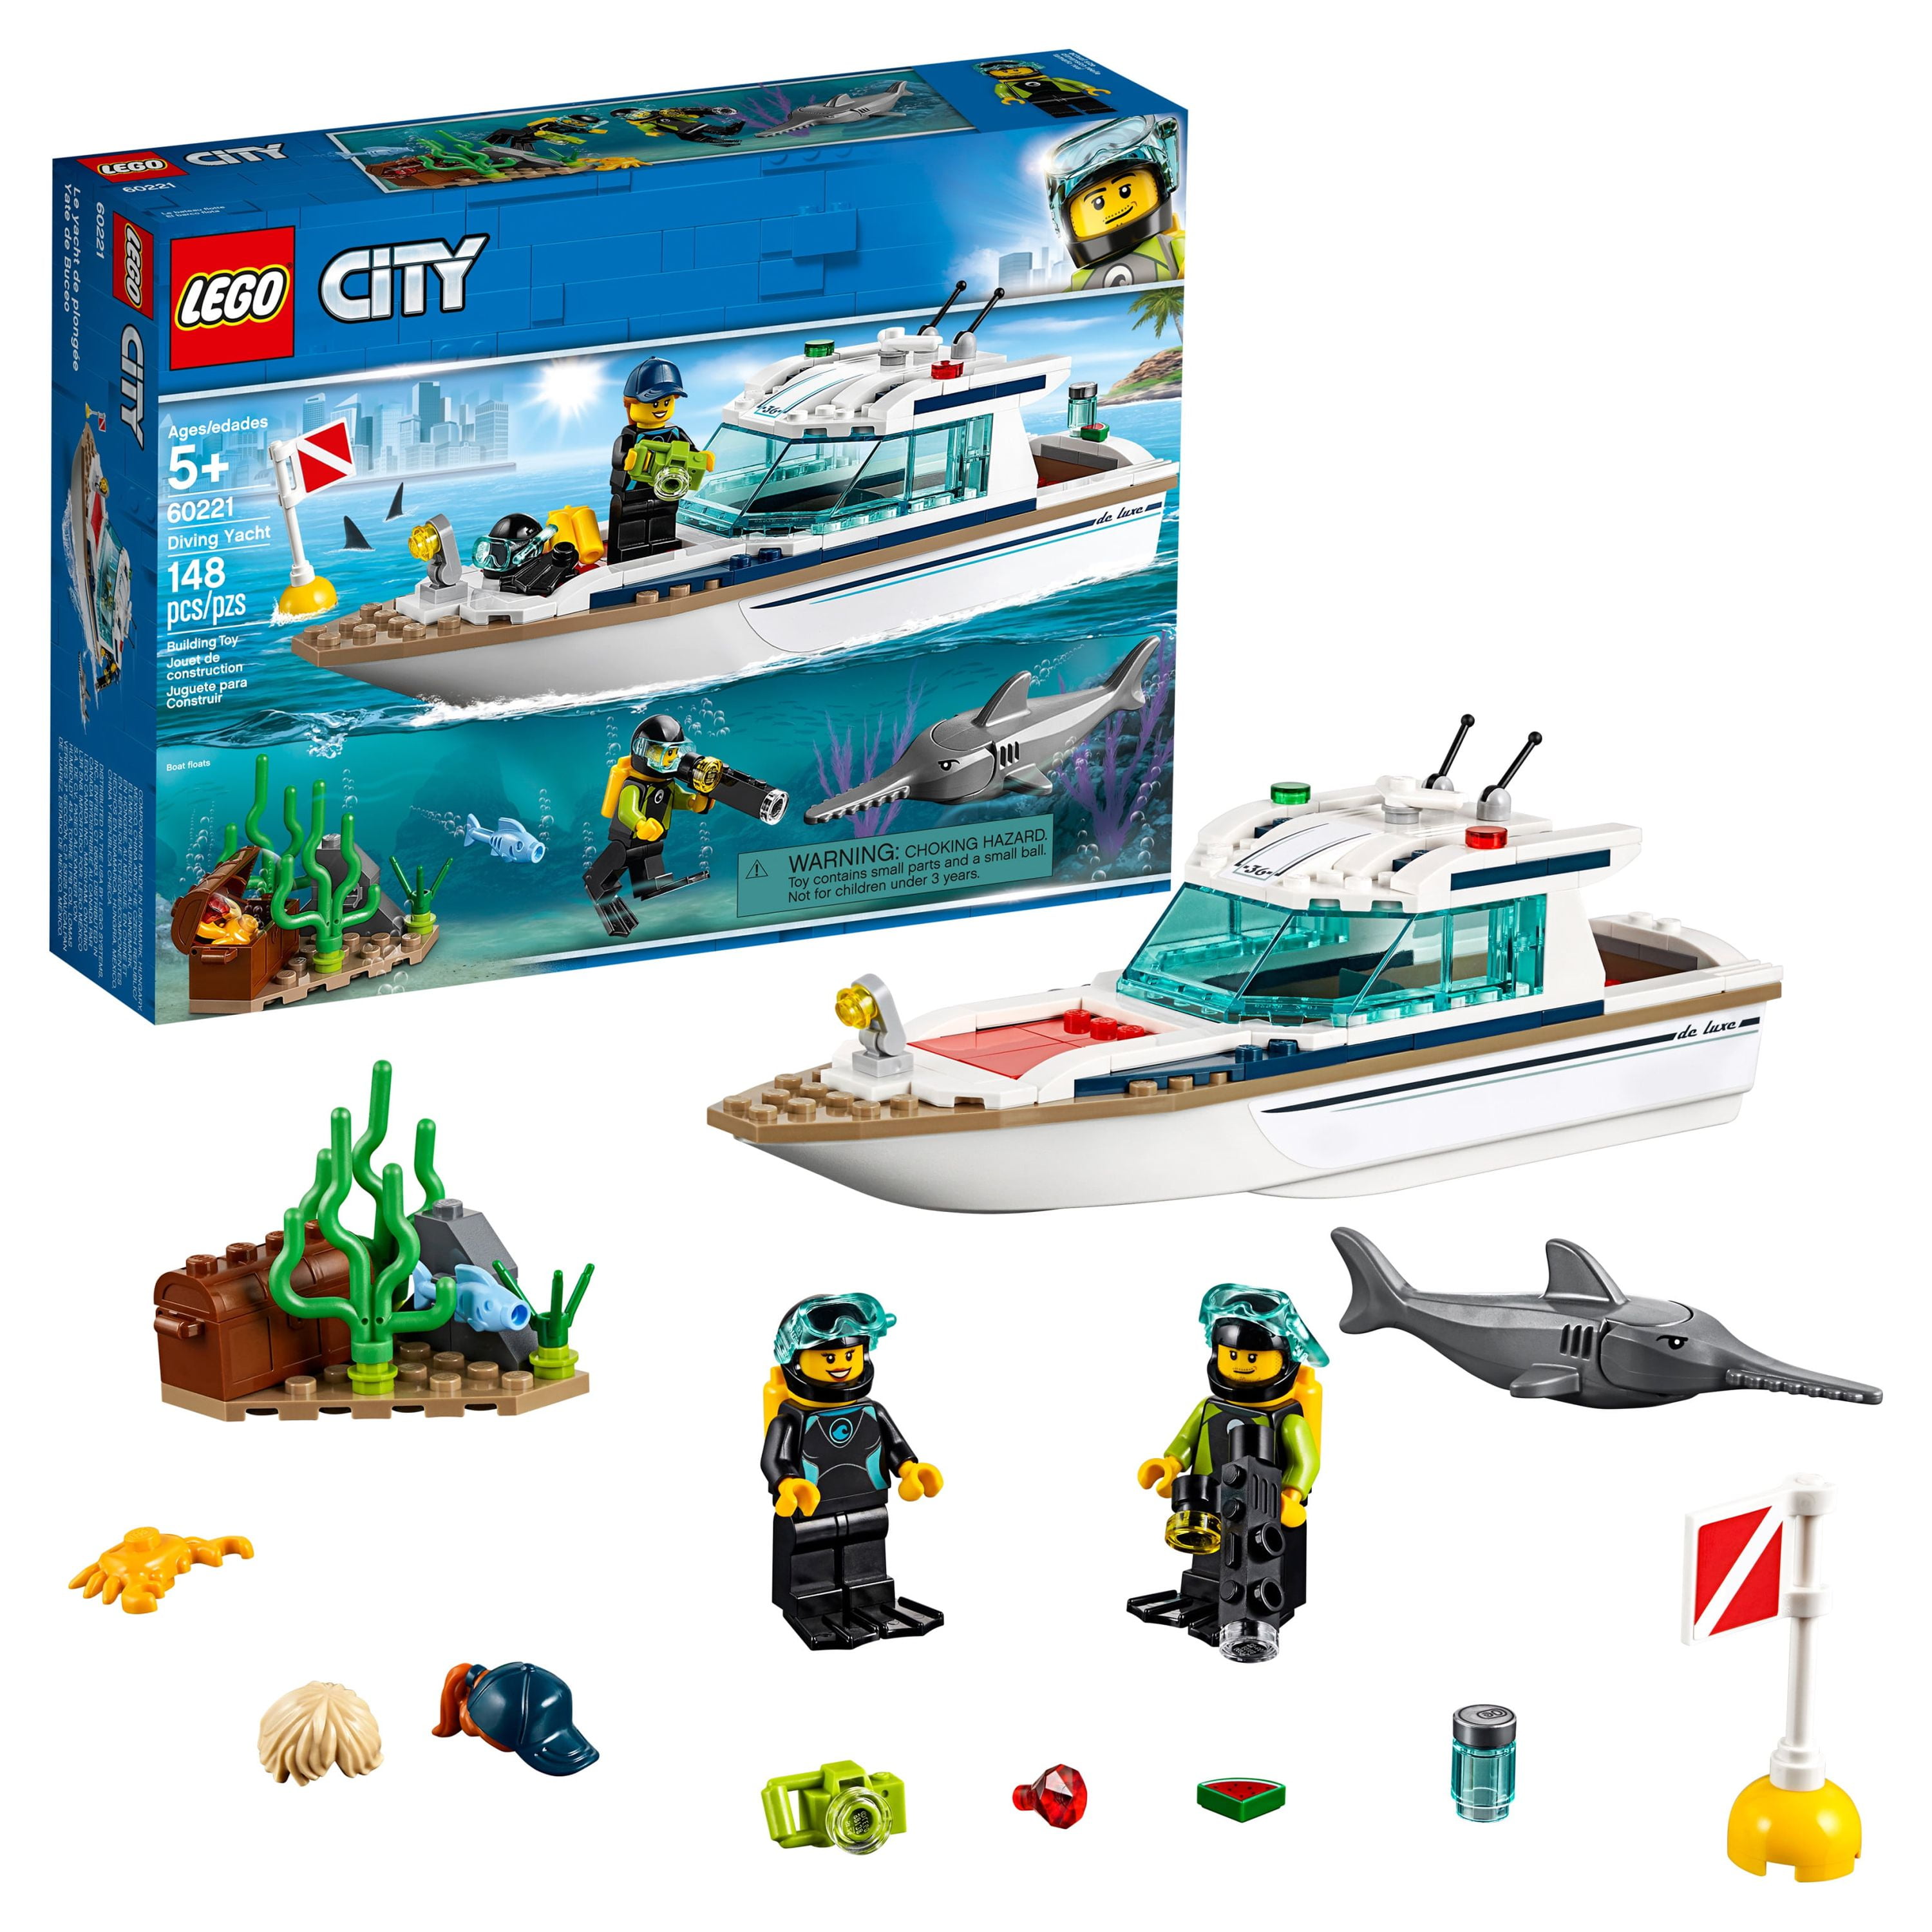 Buy One Piece Lego Ship online